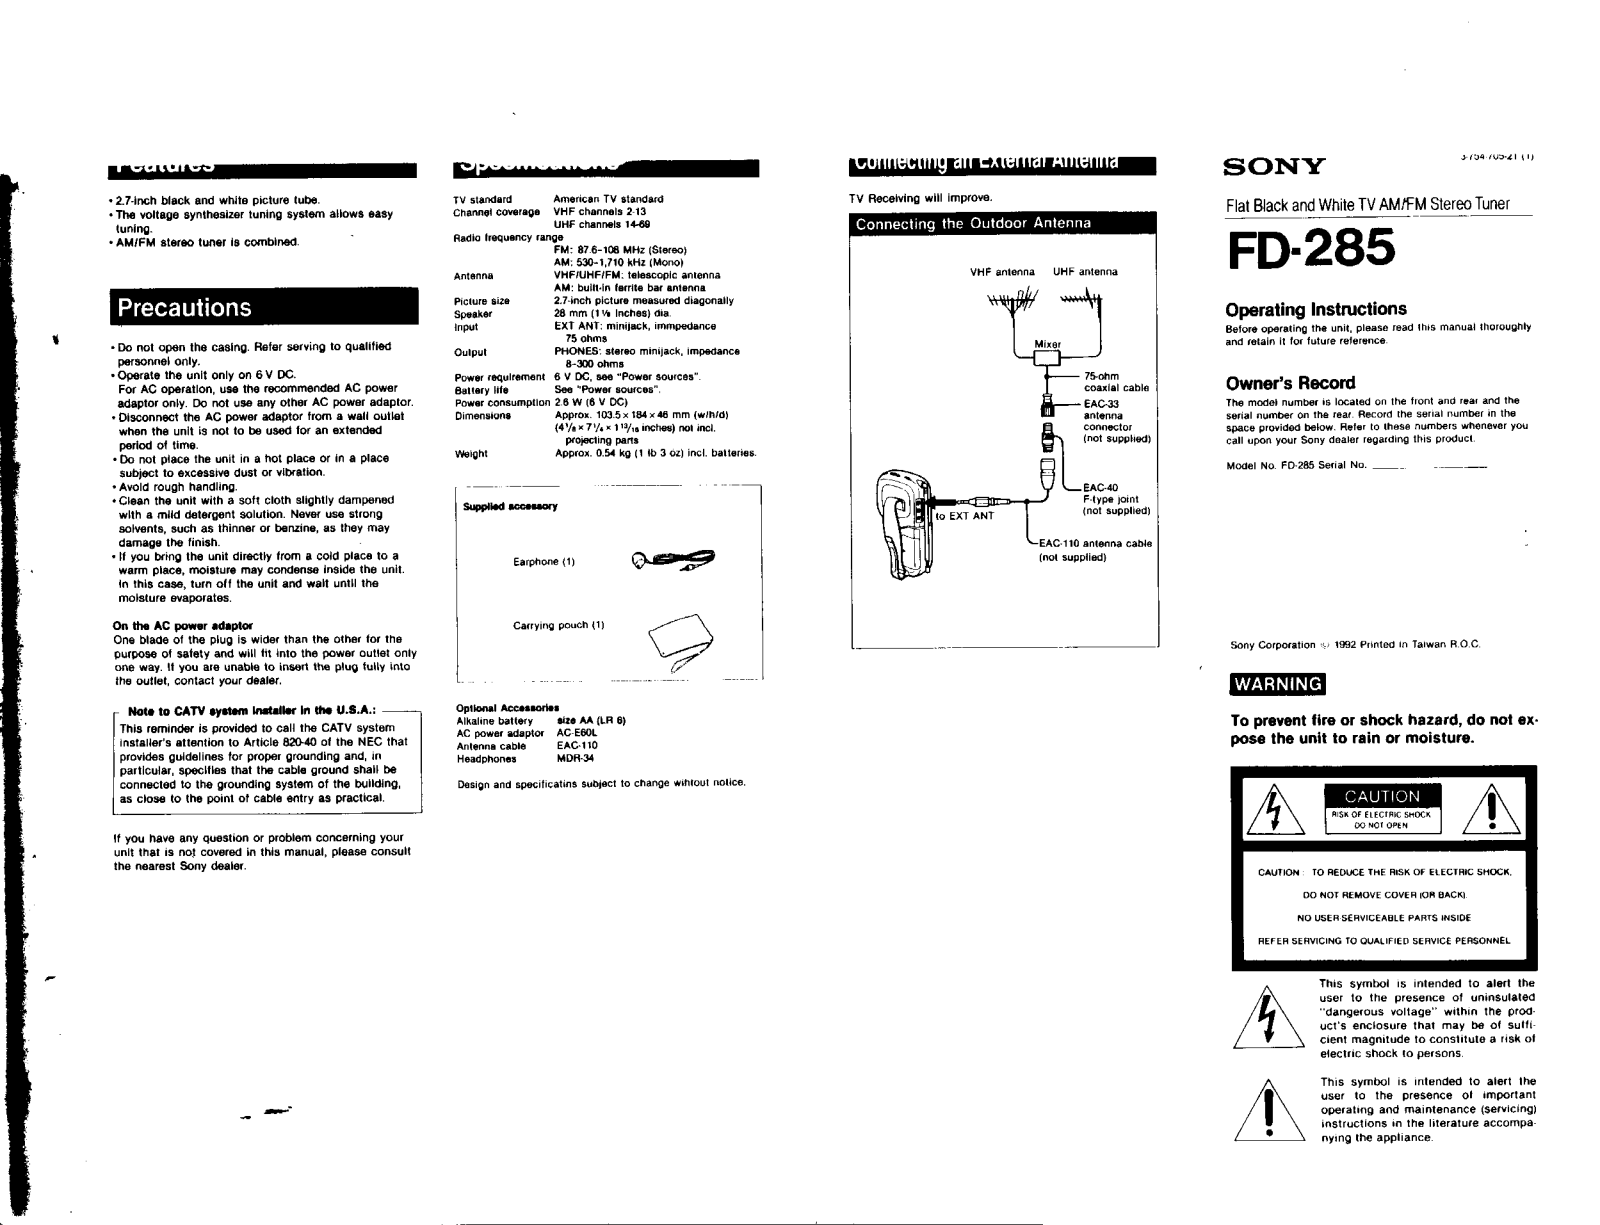 Sony FD285 Operating Manual